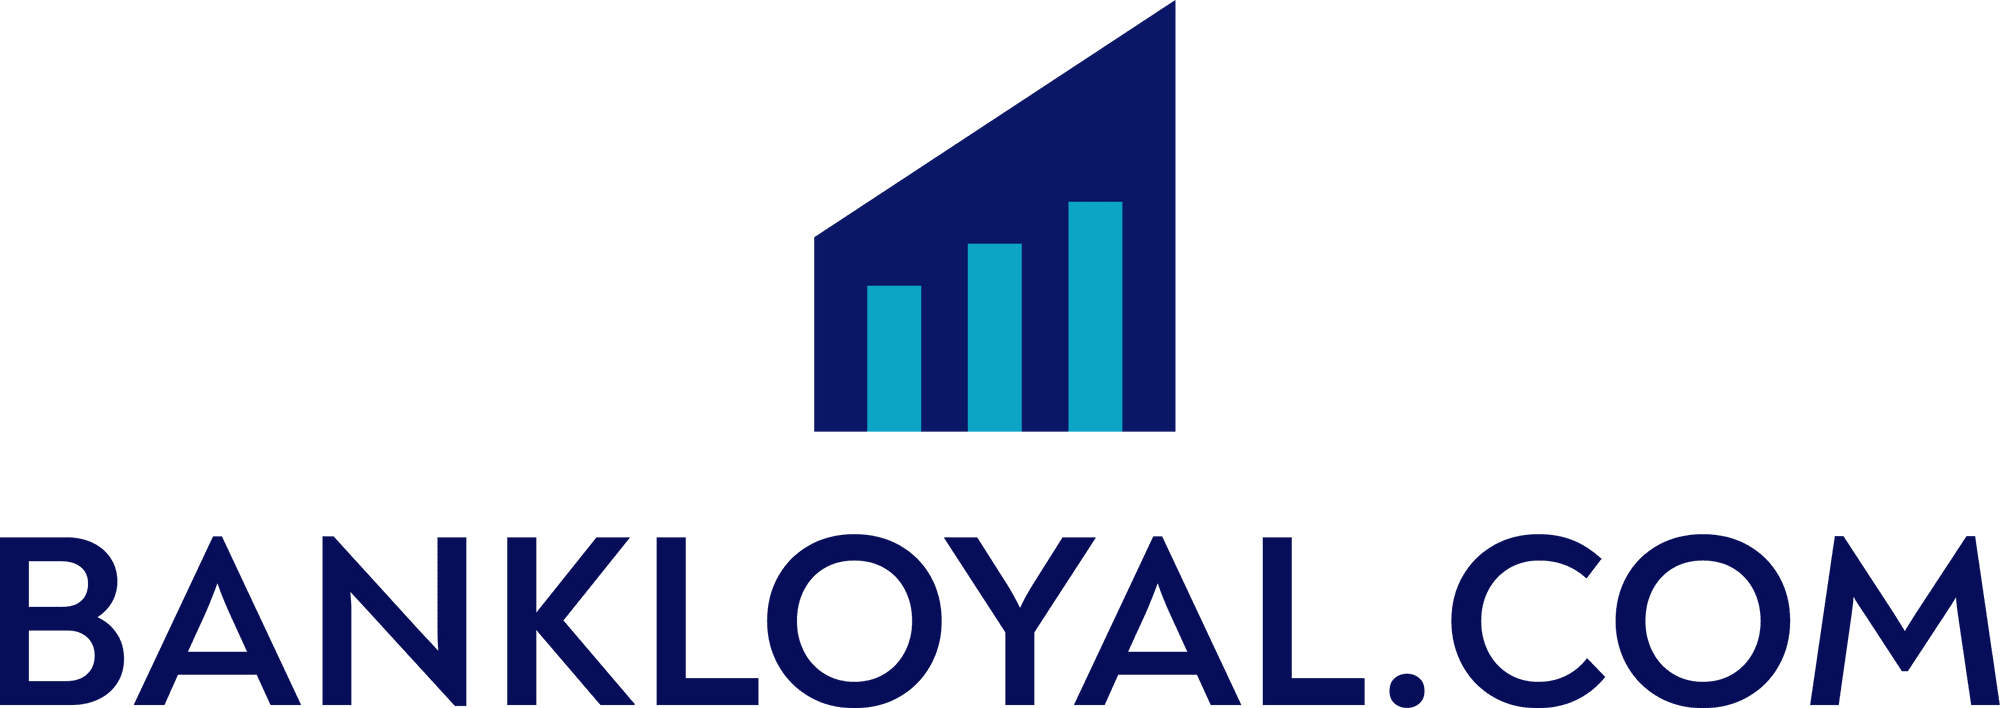 SiteGoRound Premium Domains For Sale BankLoyal Logo